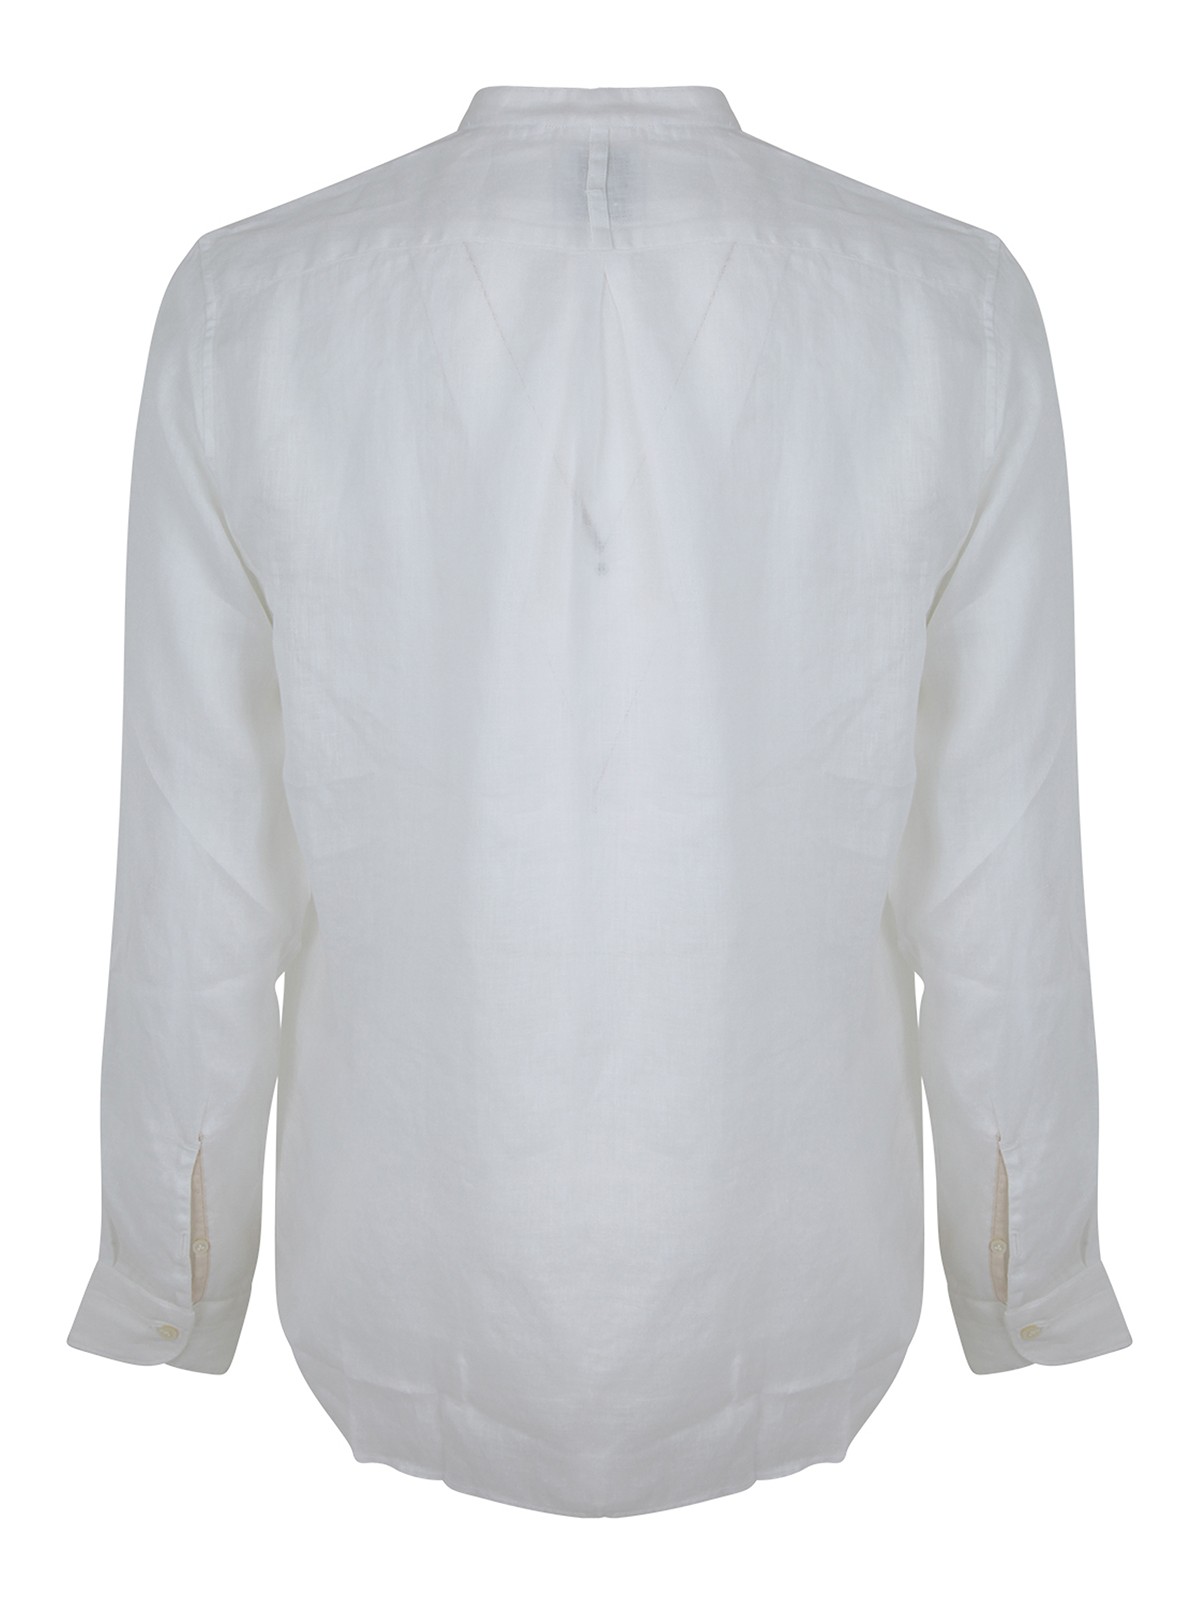 Shop Dnl Camisa - Blanco In White